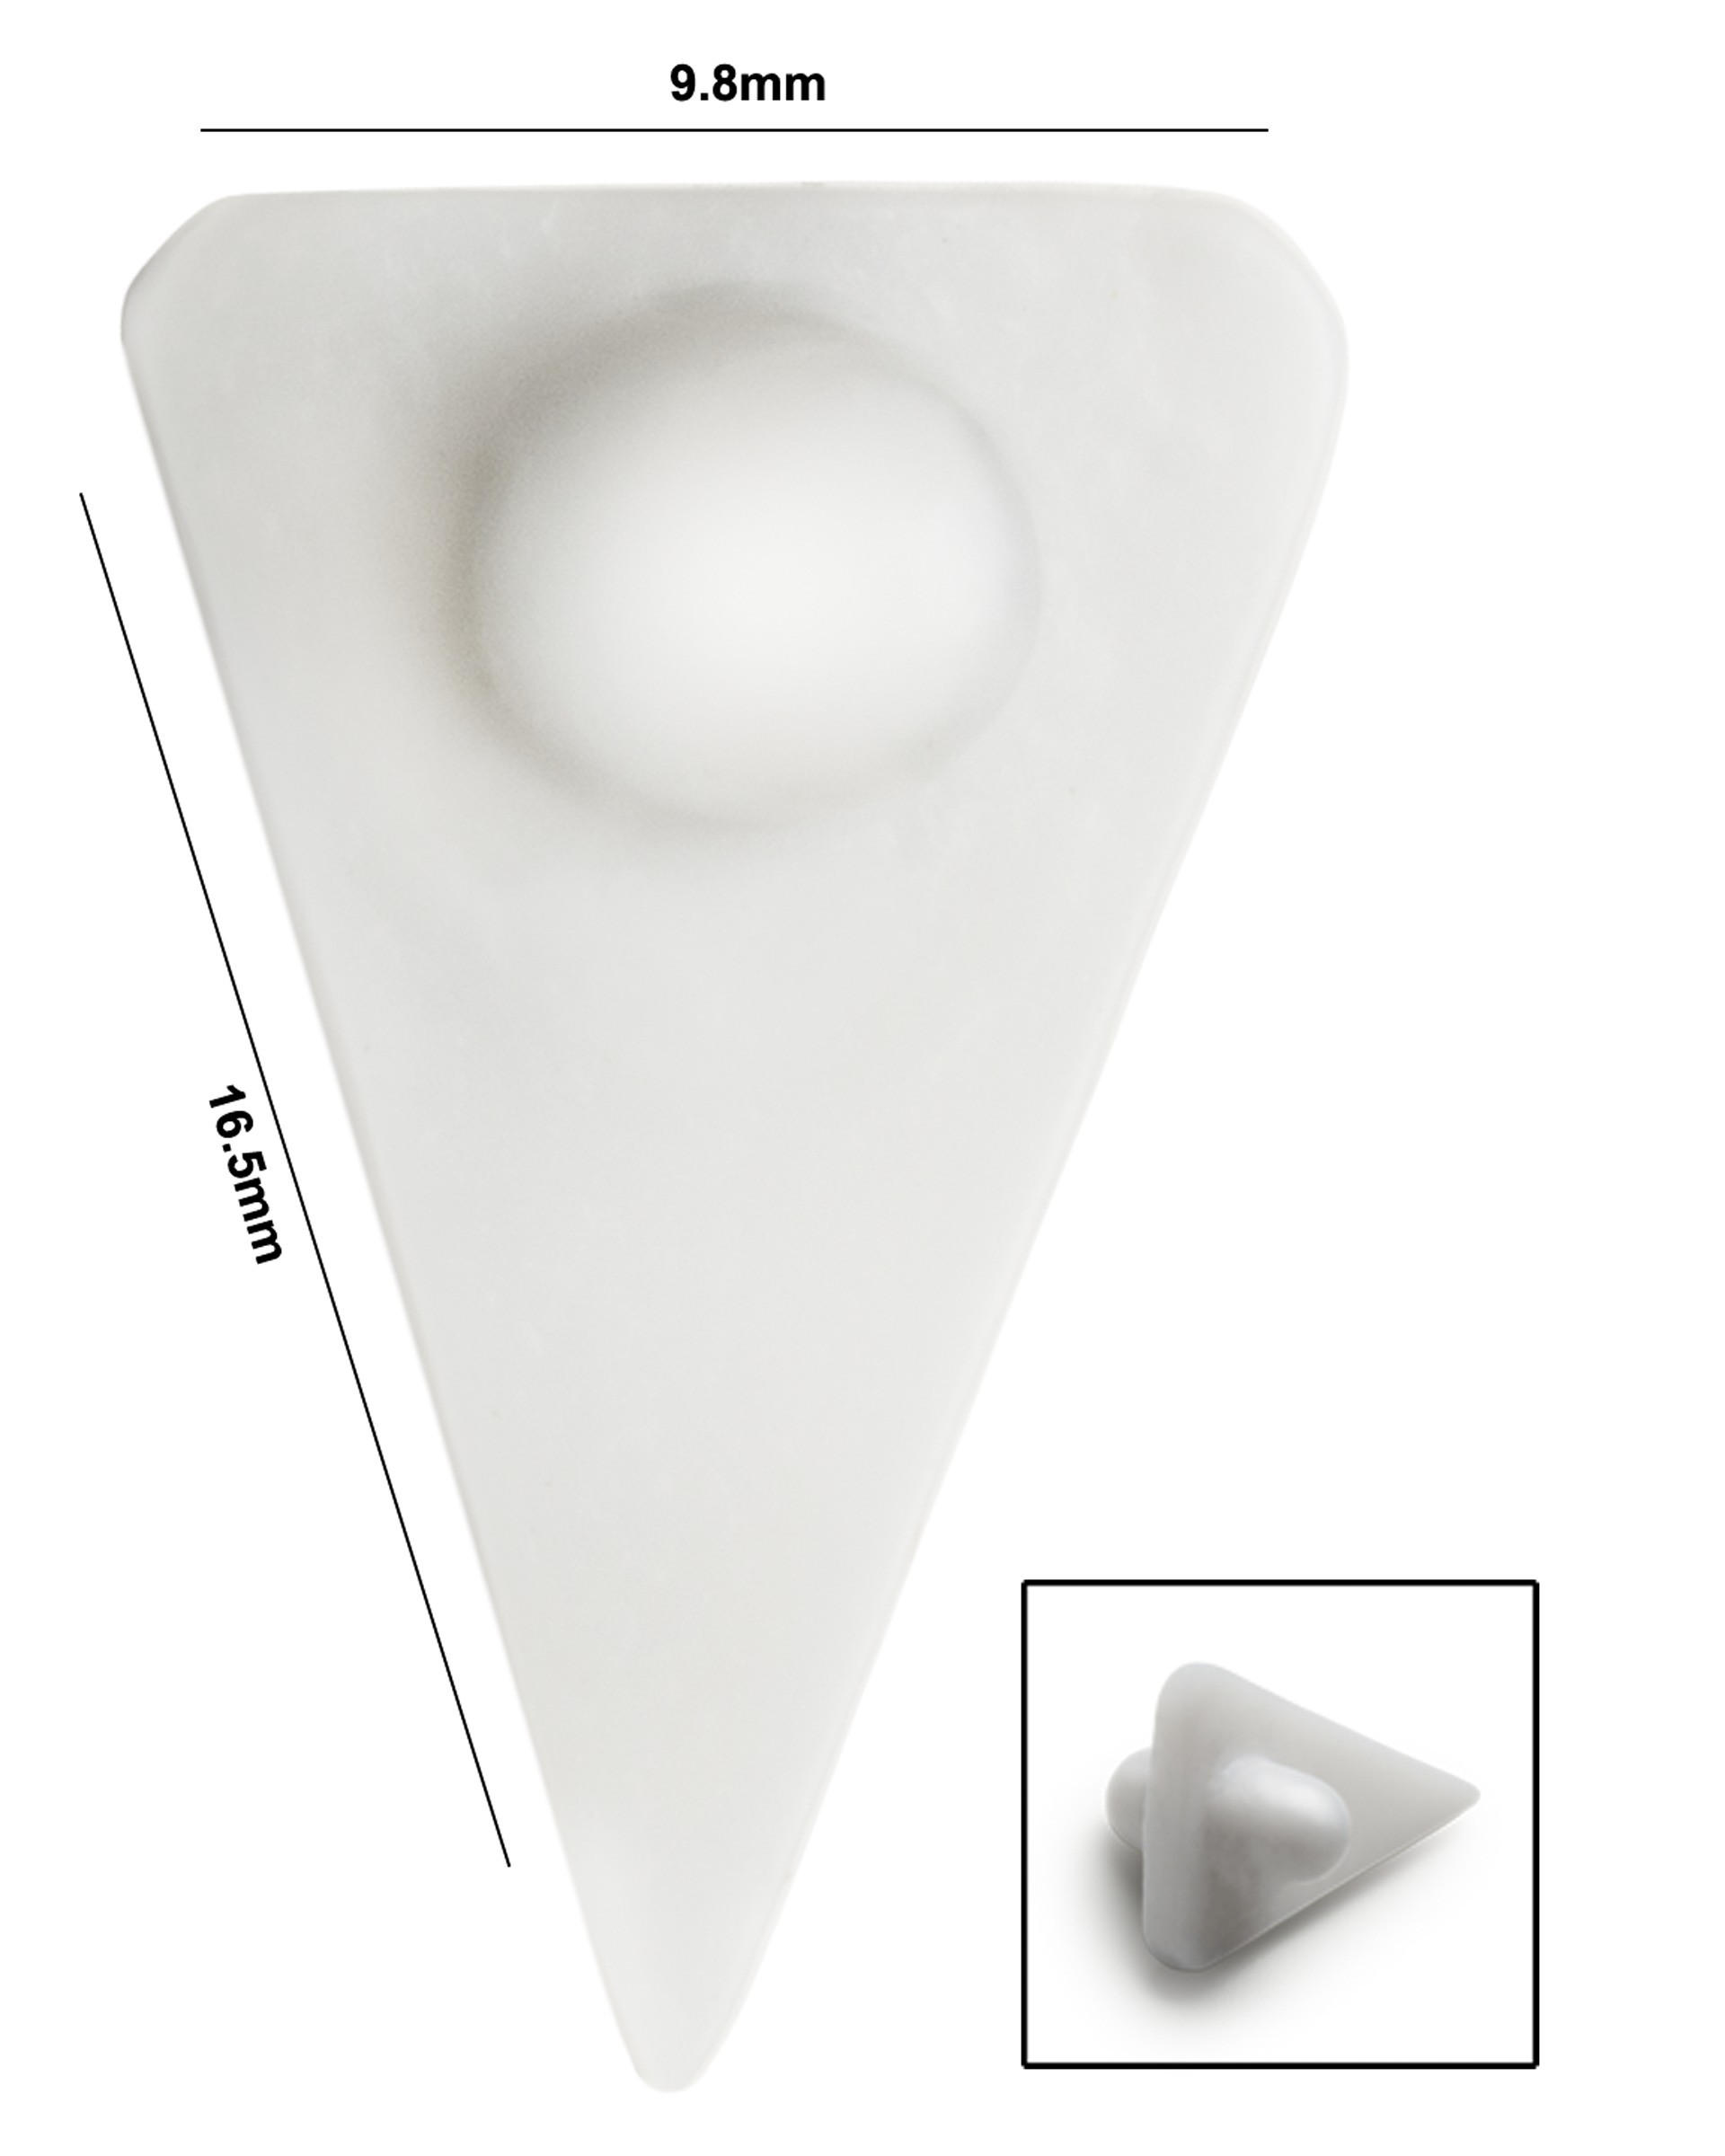 SP Bel-Art Spinvane Teflon Triangular Magnetic Stirring Bar; 10.4 x 16.5 x 9.8mm, Fits 3-5 ml Vials, White